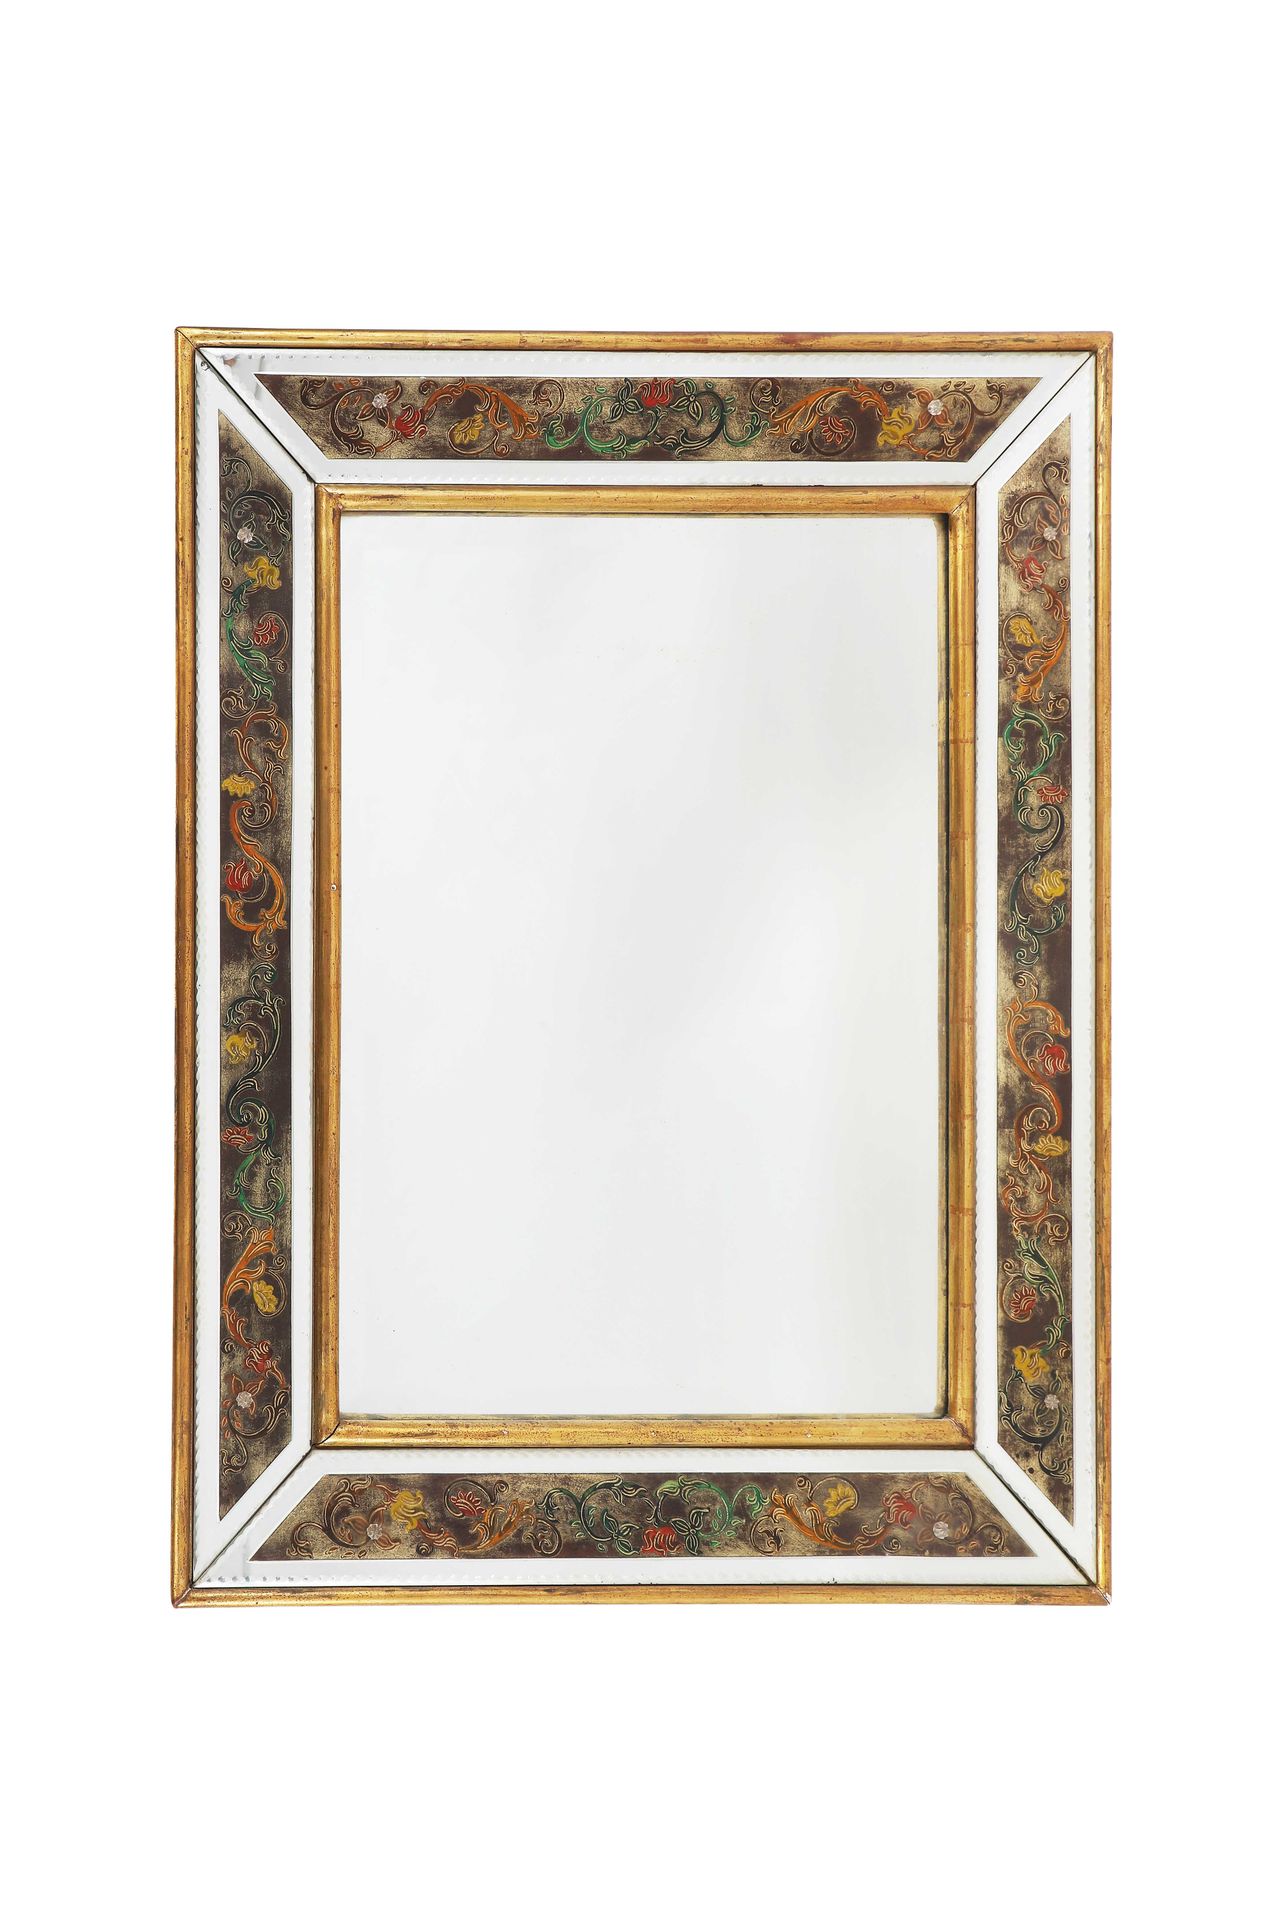 Null 一面带有多色花楣的穆拉诺玻璃威尼斯镜子。

损坏和丢失的部件

99 x 73 cm